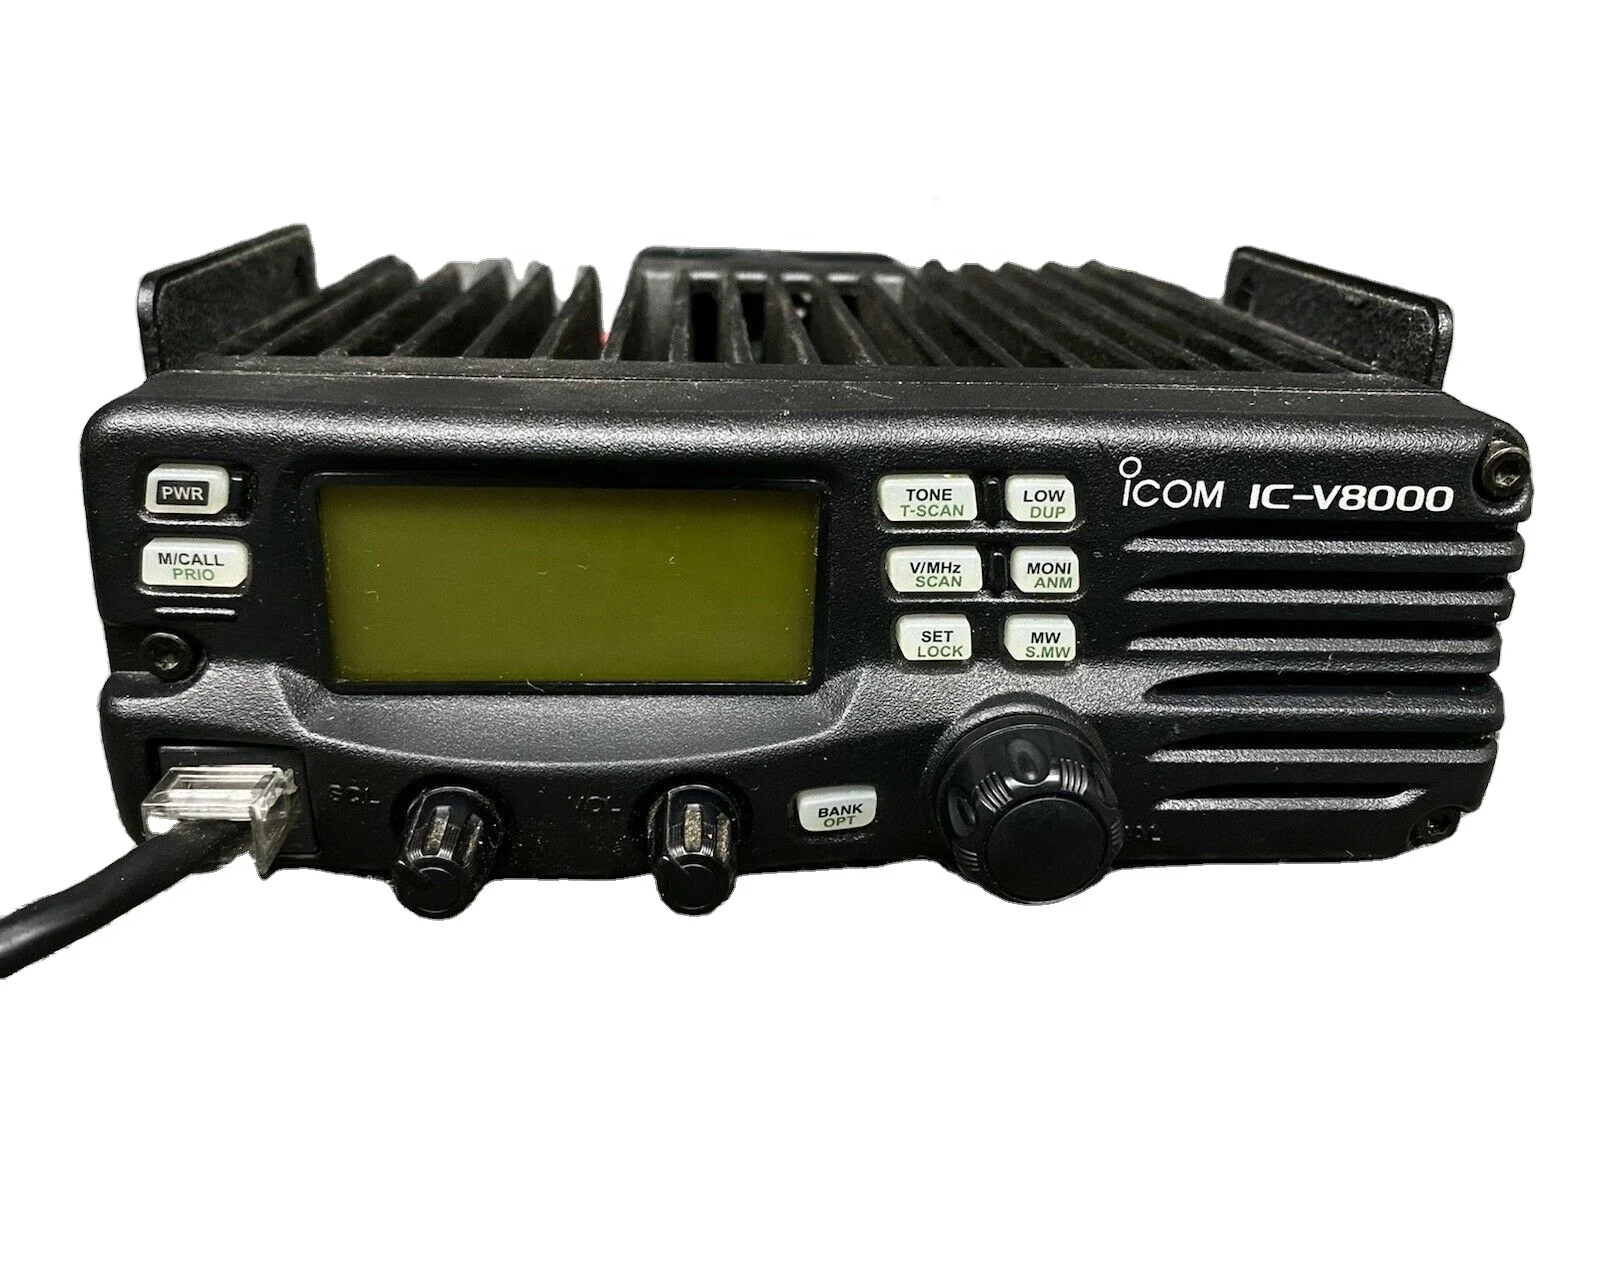 

Hot Sale vhf transceiver Ic-V8000 v8000 75W High Power Mobile Radio marine radio